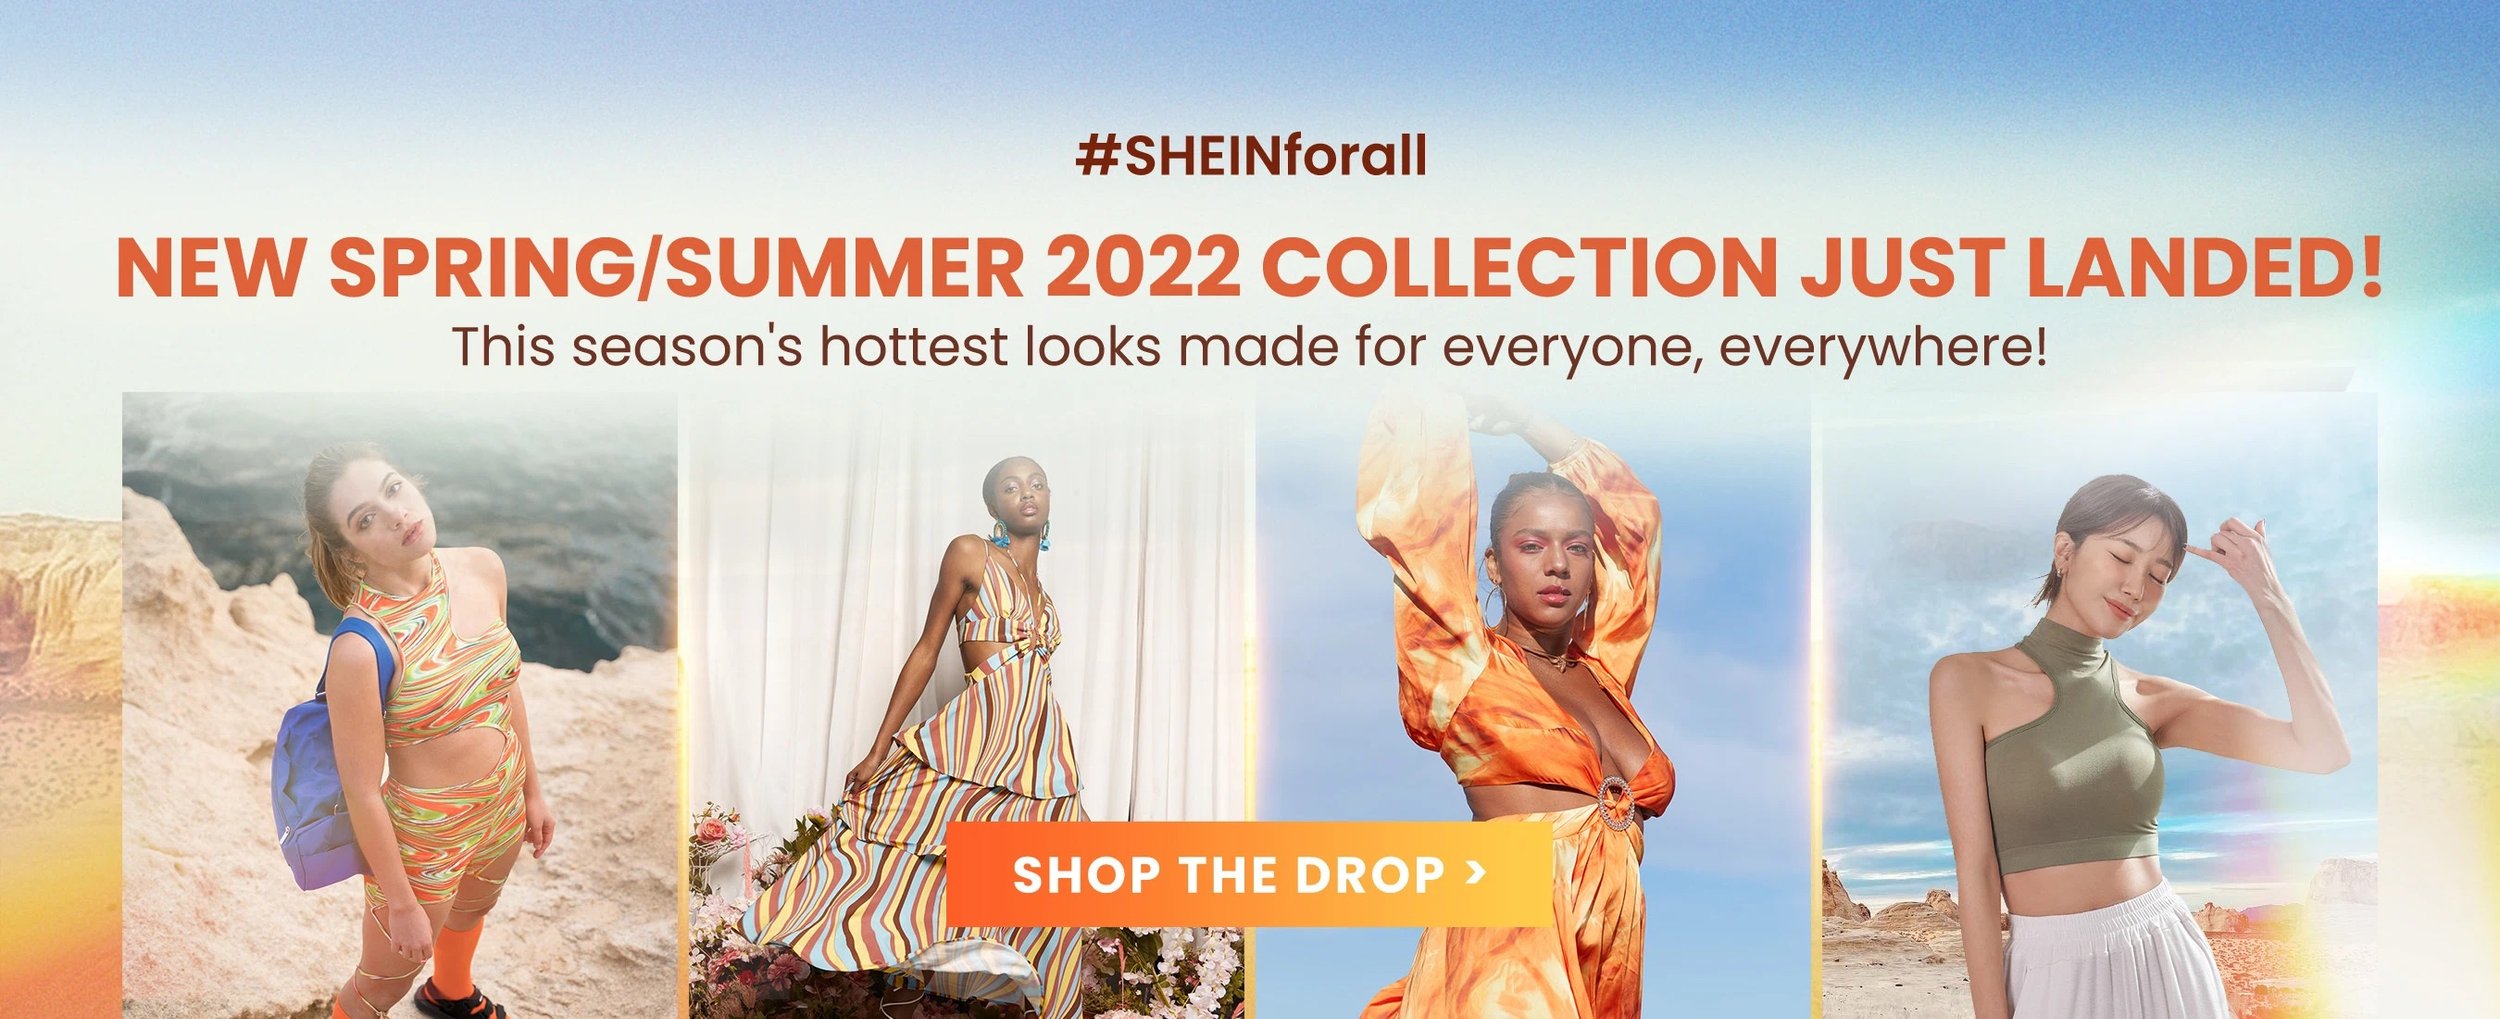  Shein launches #Sheinforall virtual fashion show